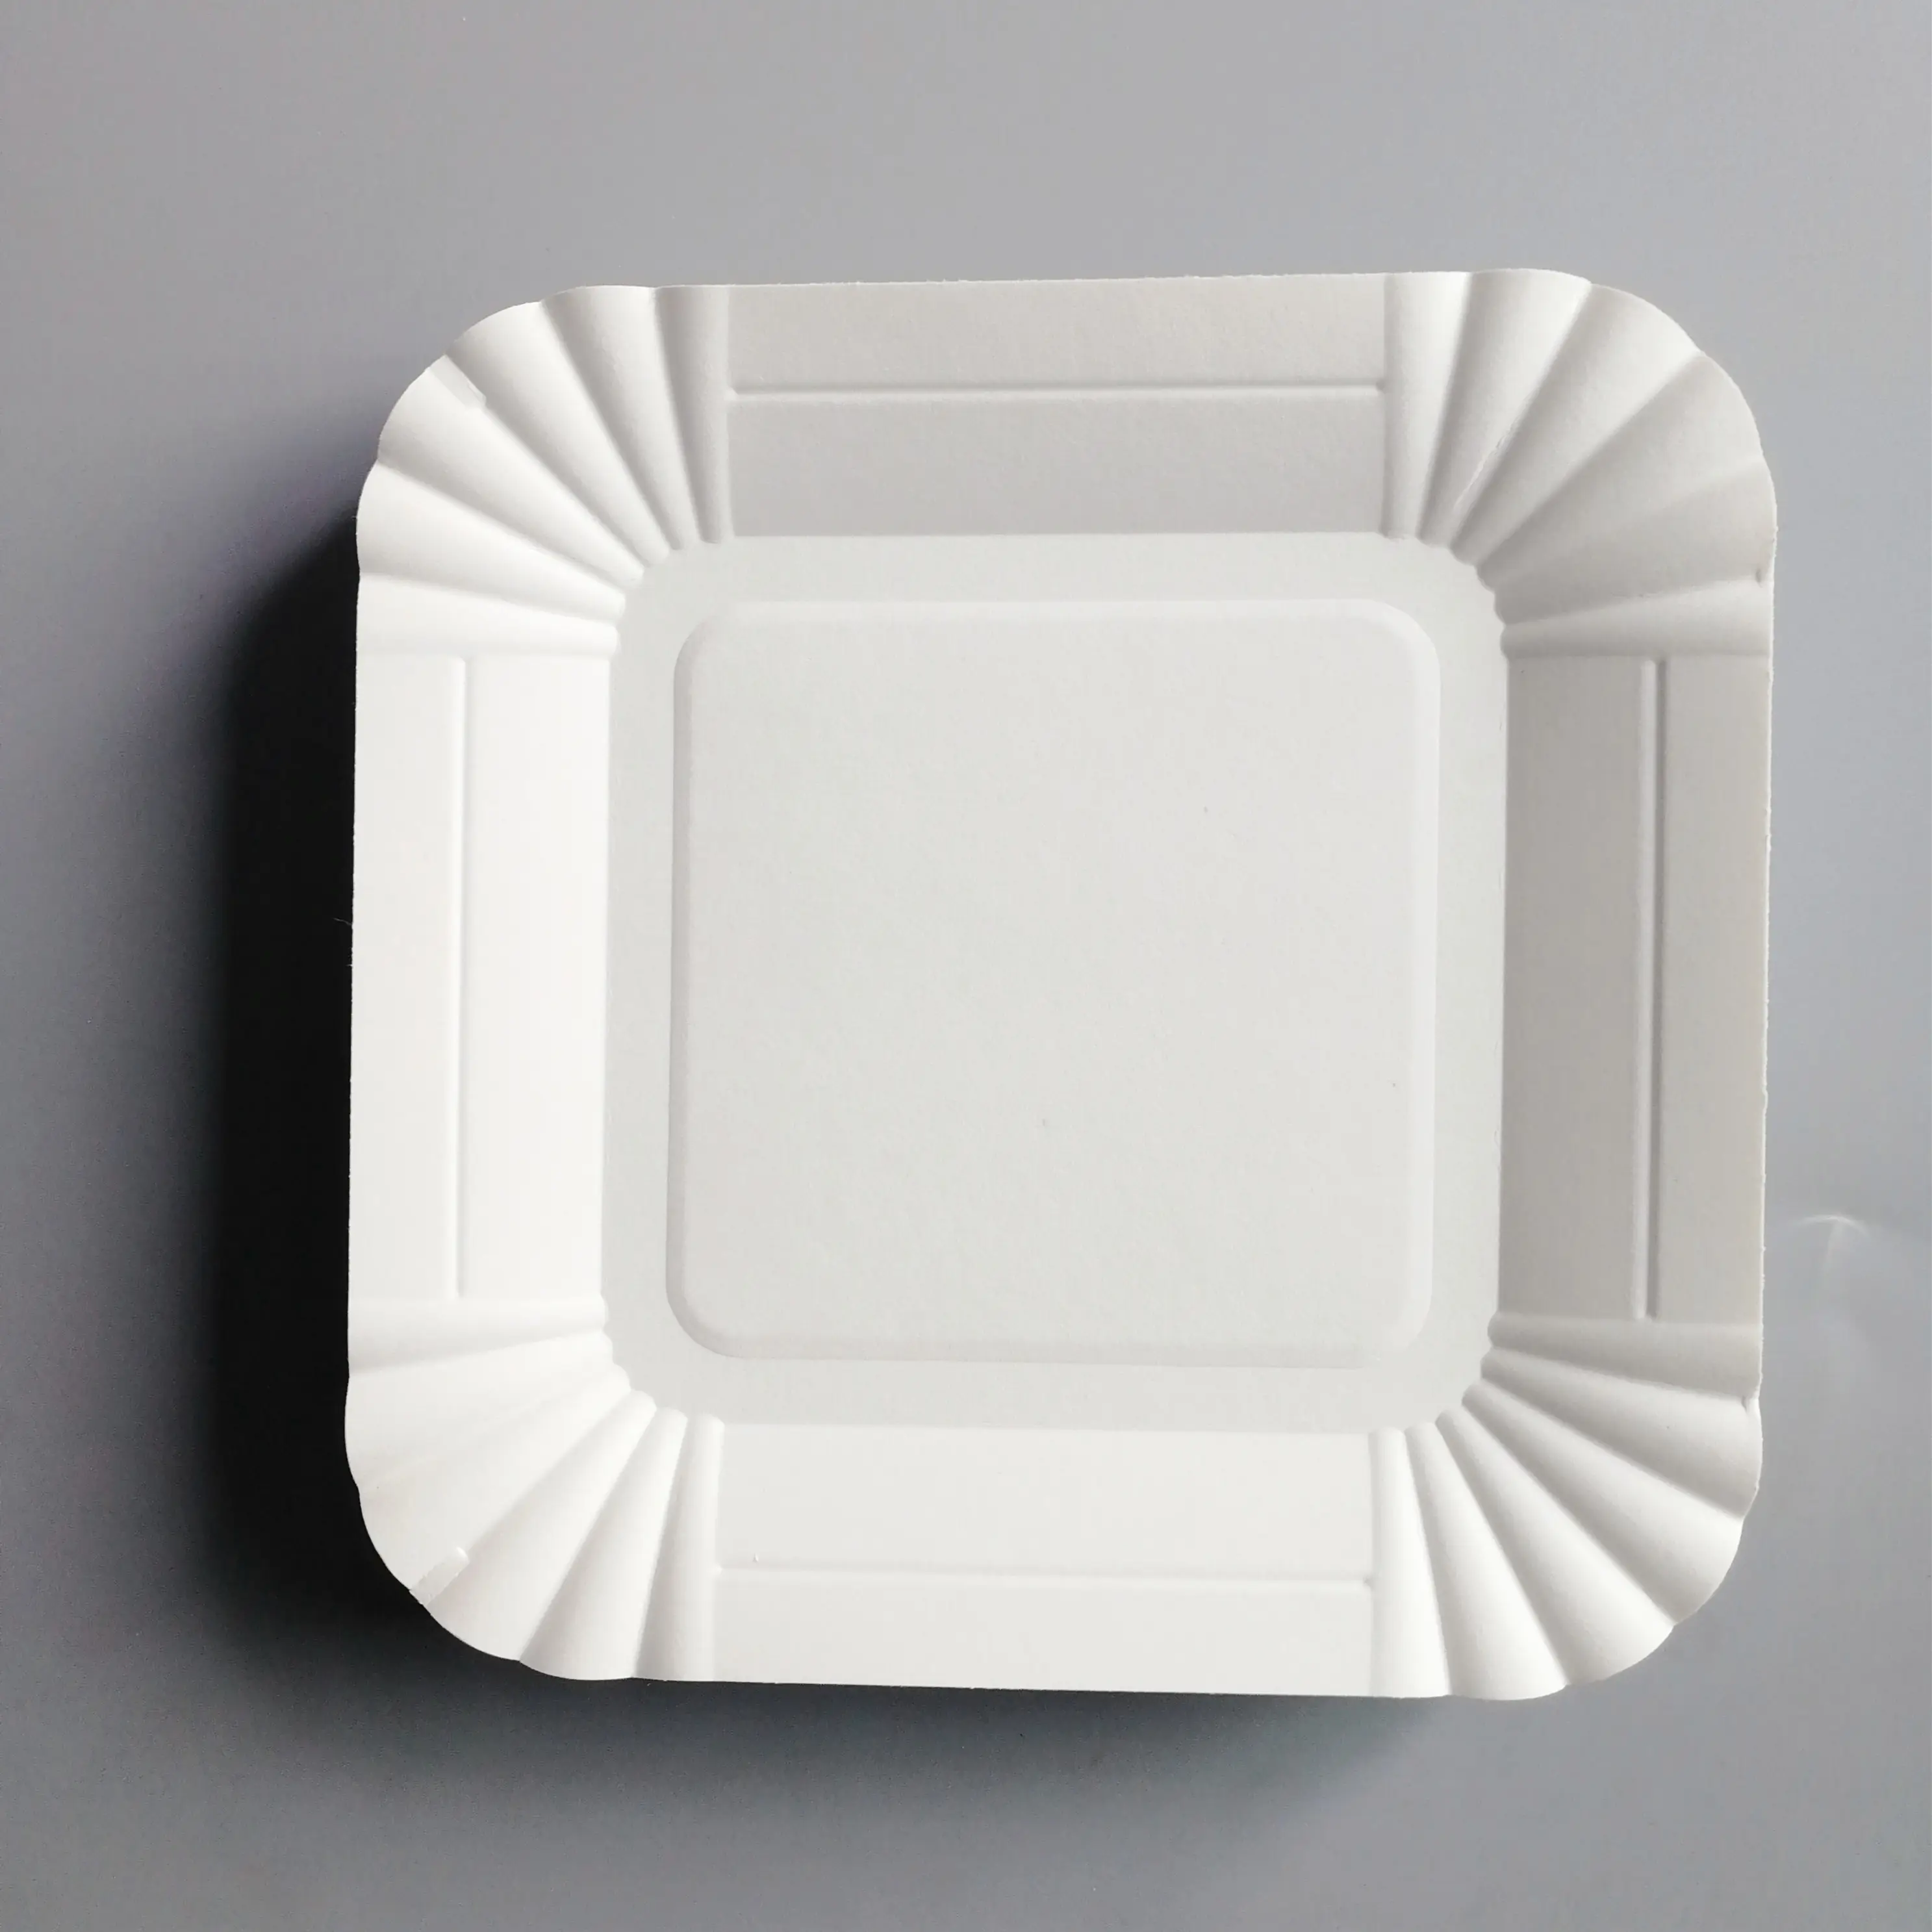 Piatti usa e getta all'ingrosso più venduti piatti per feste in carta quadrata bianca piatti in carta per forniture per feste